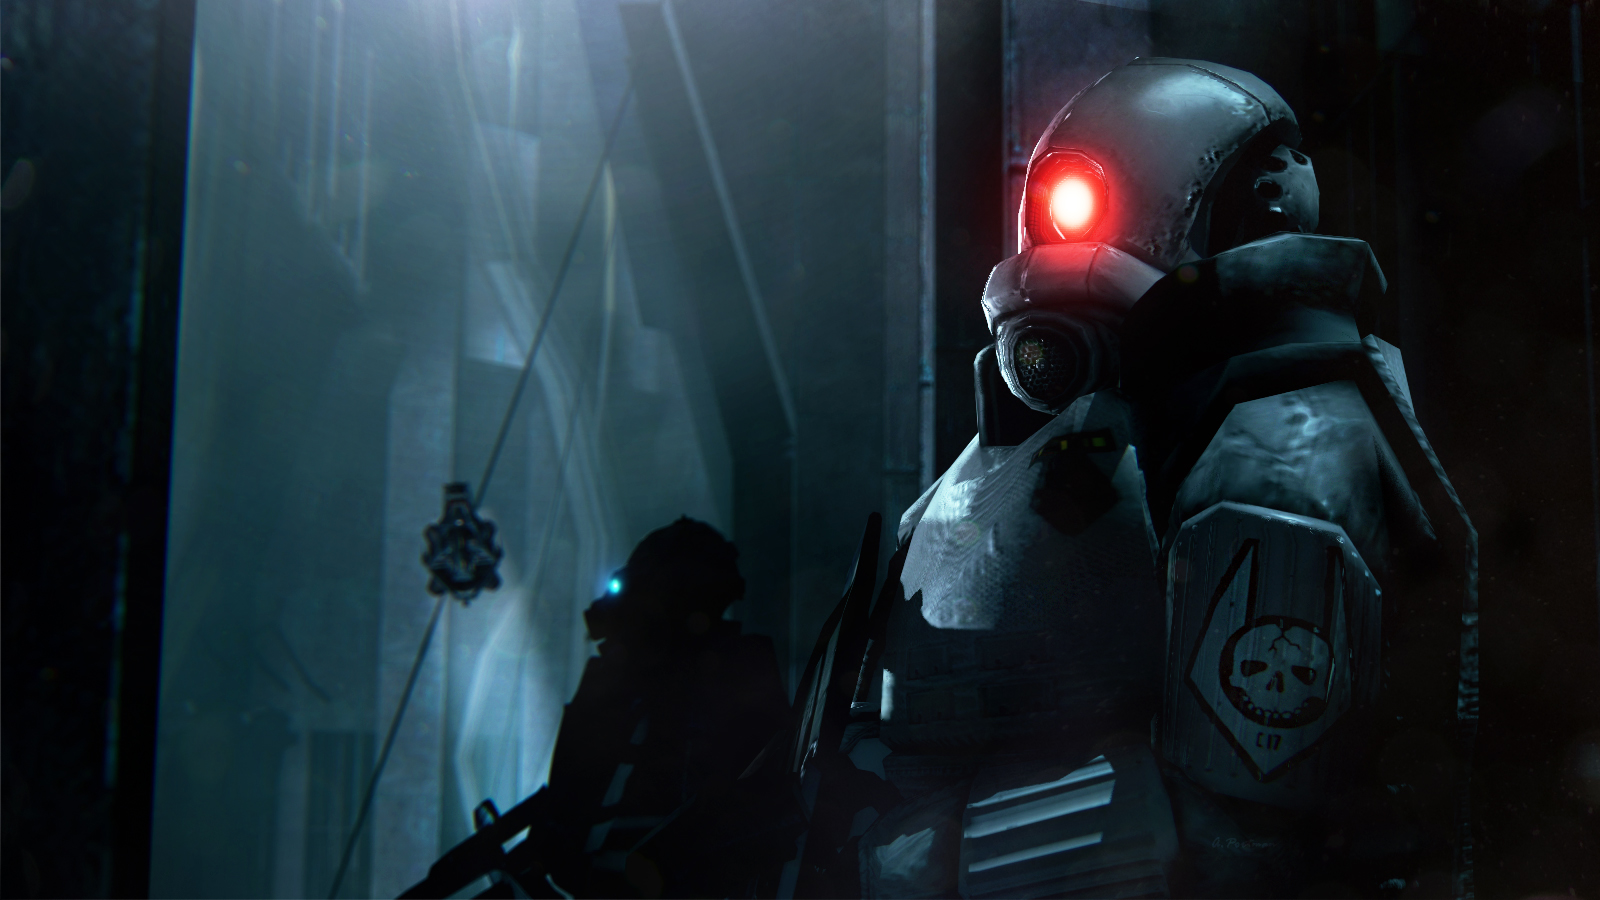 General 1600x900 Half-Life 2 Combine Citadel City 17 video games science fiction glowing eyes